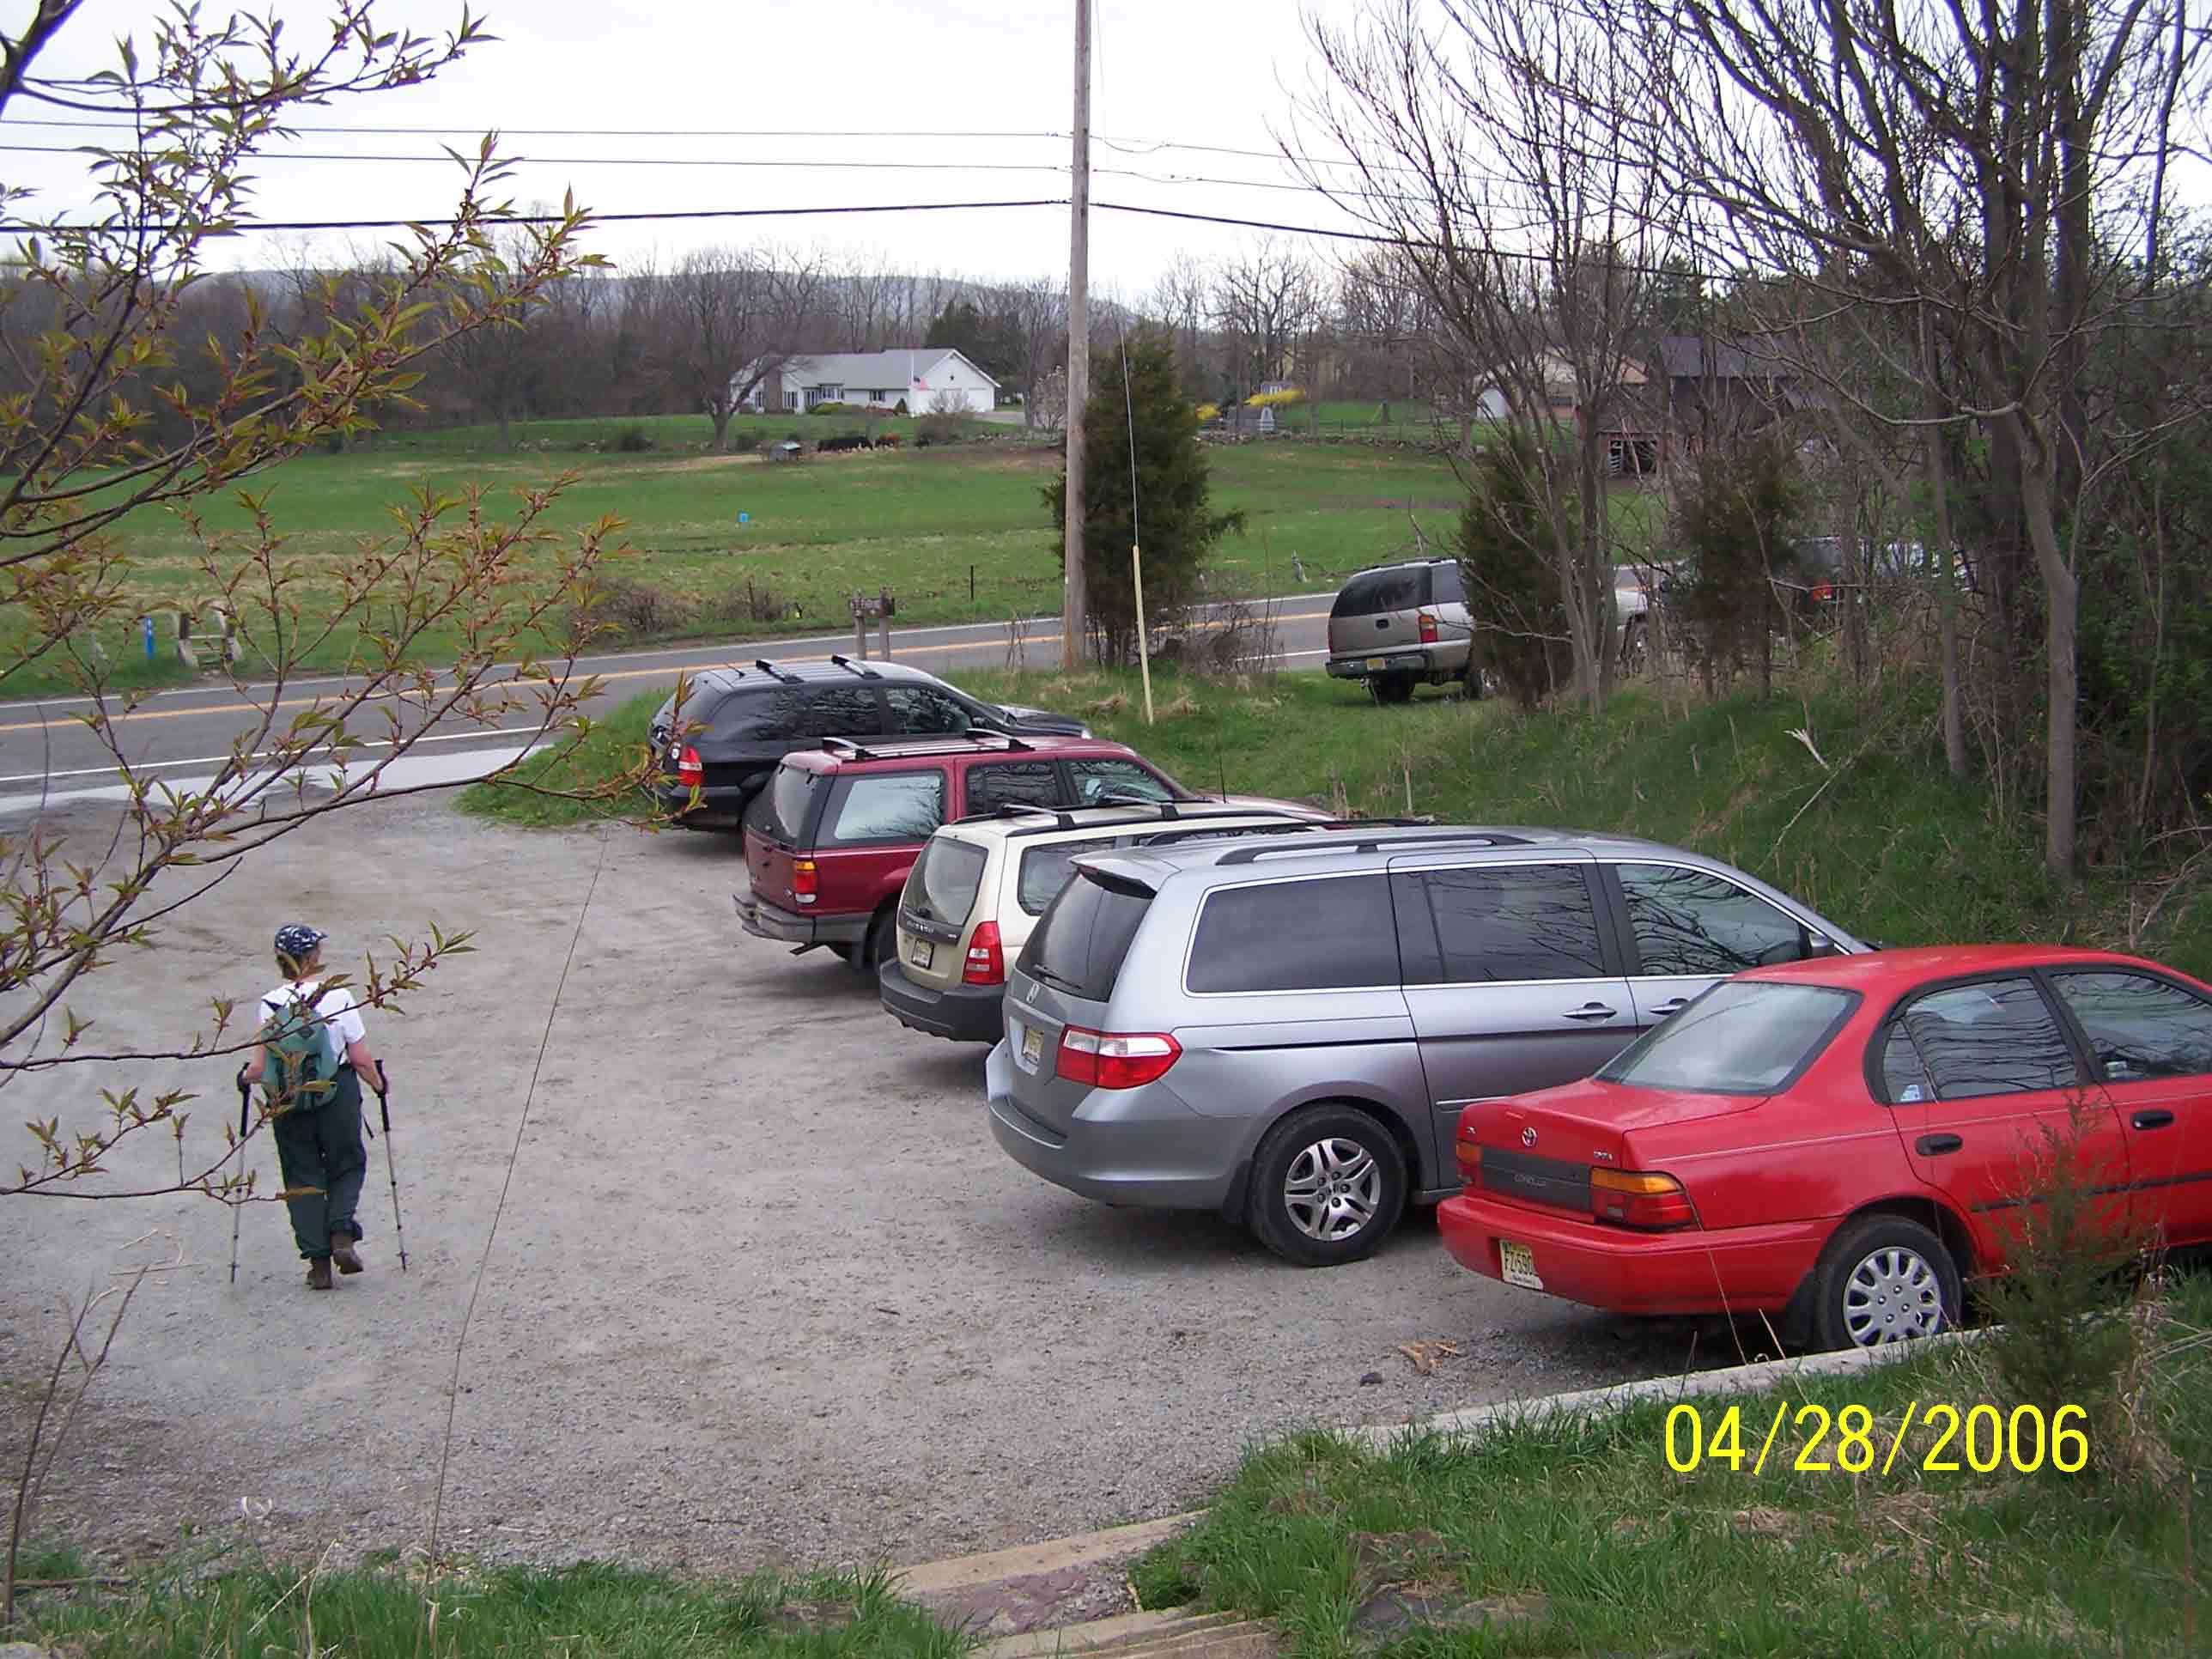 mm 9.1 - Parking at NJ 94 - 4/28/07. Courtesy at@rohland.org